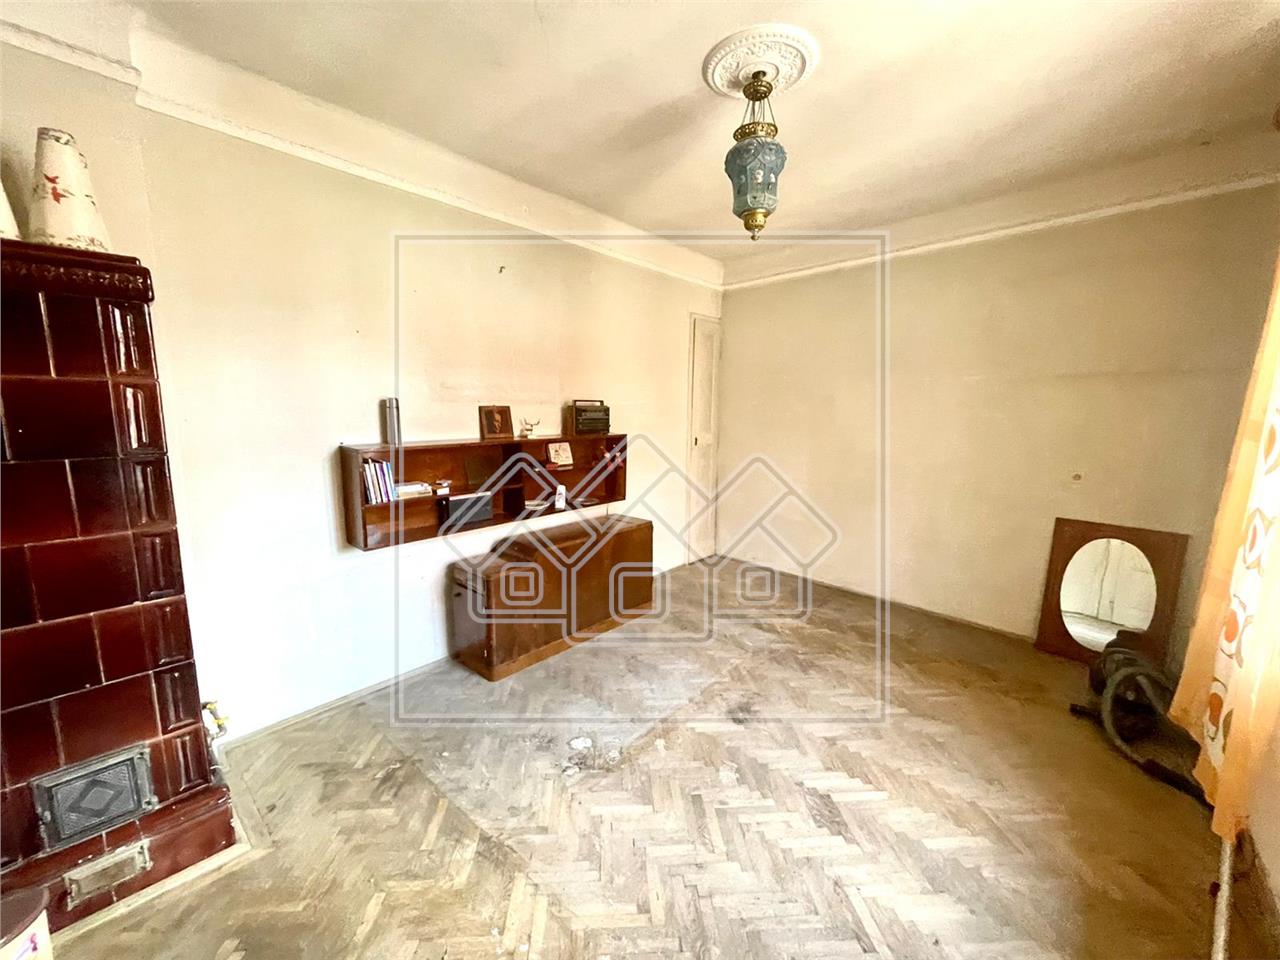 Wohnung zum Verkauf in Sibiu - ULTRACENTRALA Bereich